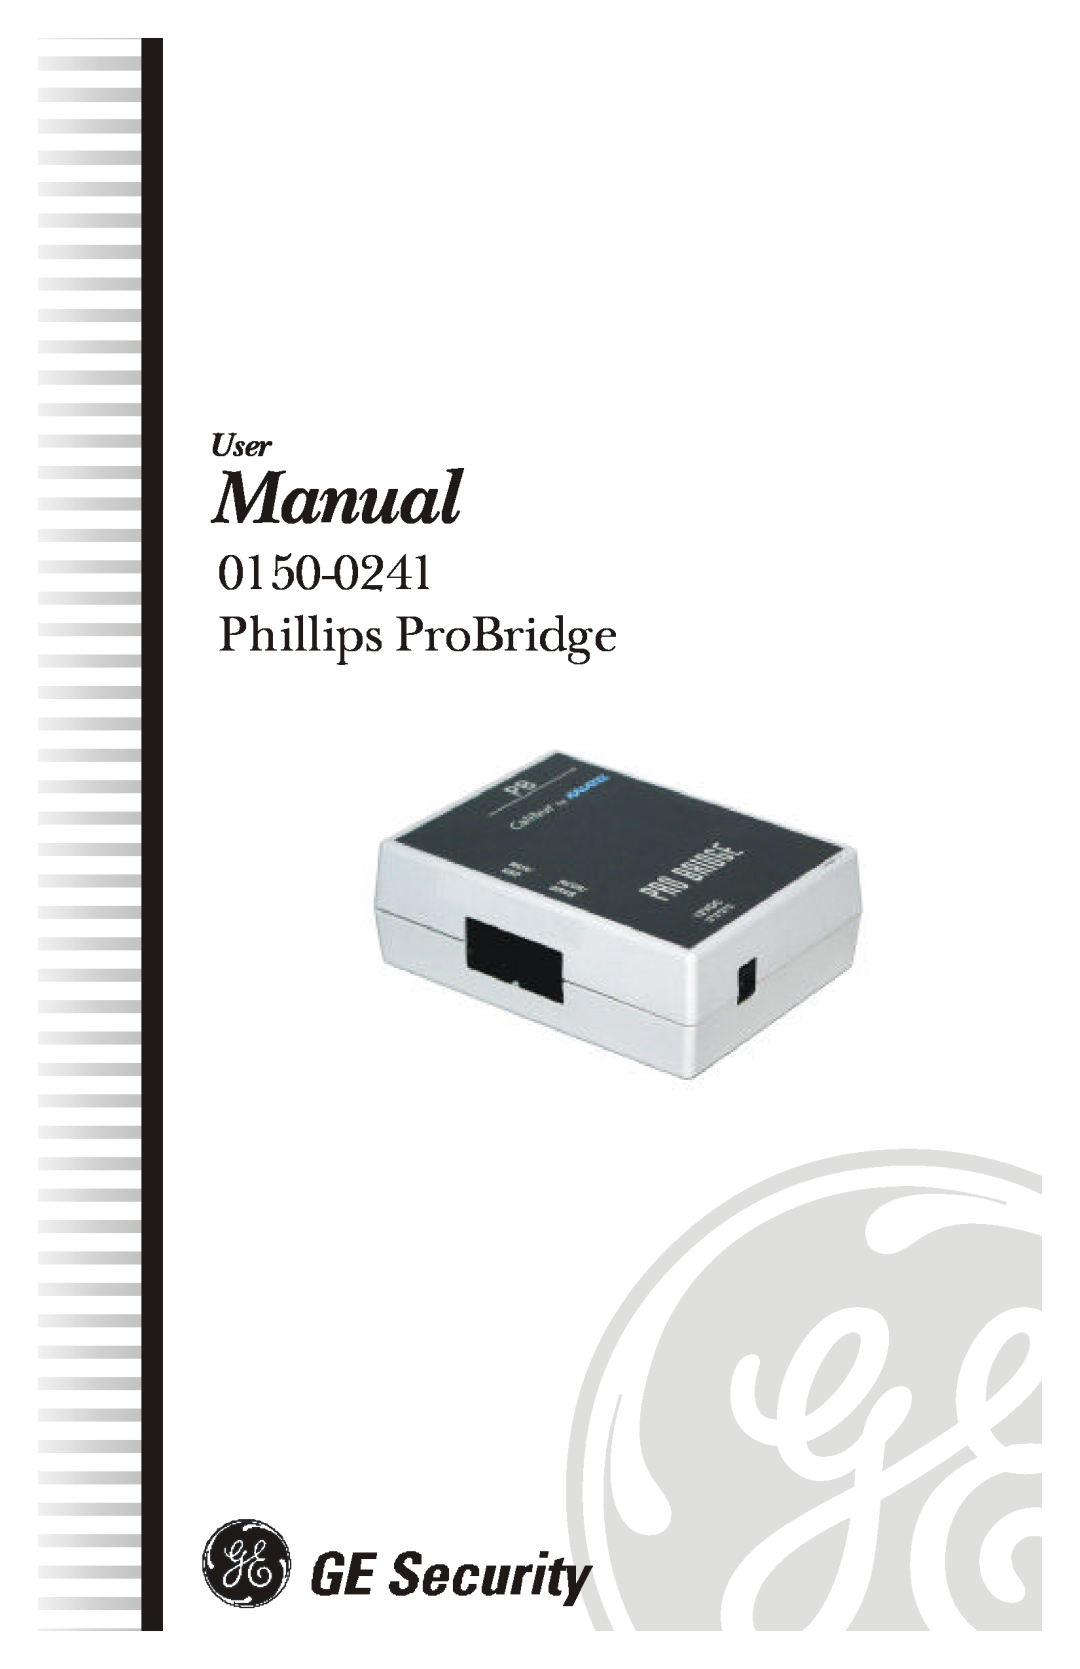 Philips 0150-0241B user manual Manual, 0150-0241Phillips ProBridge, User 